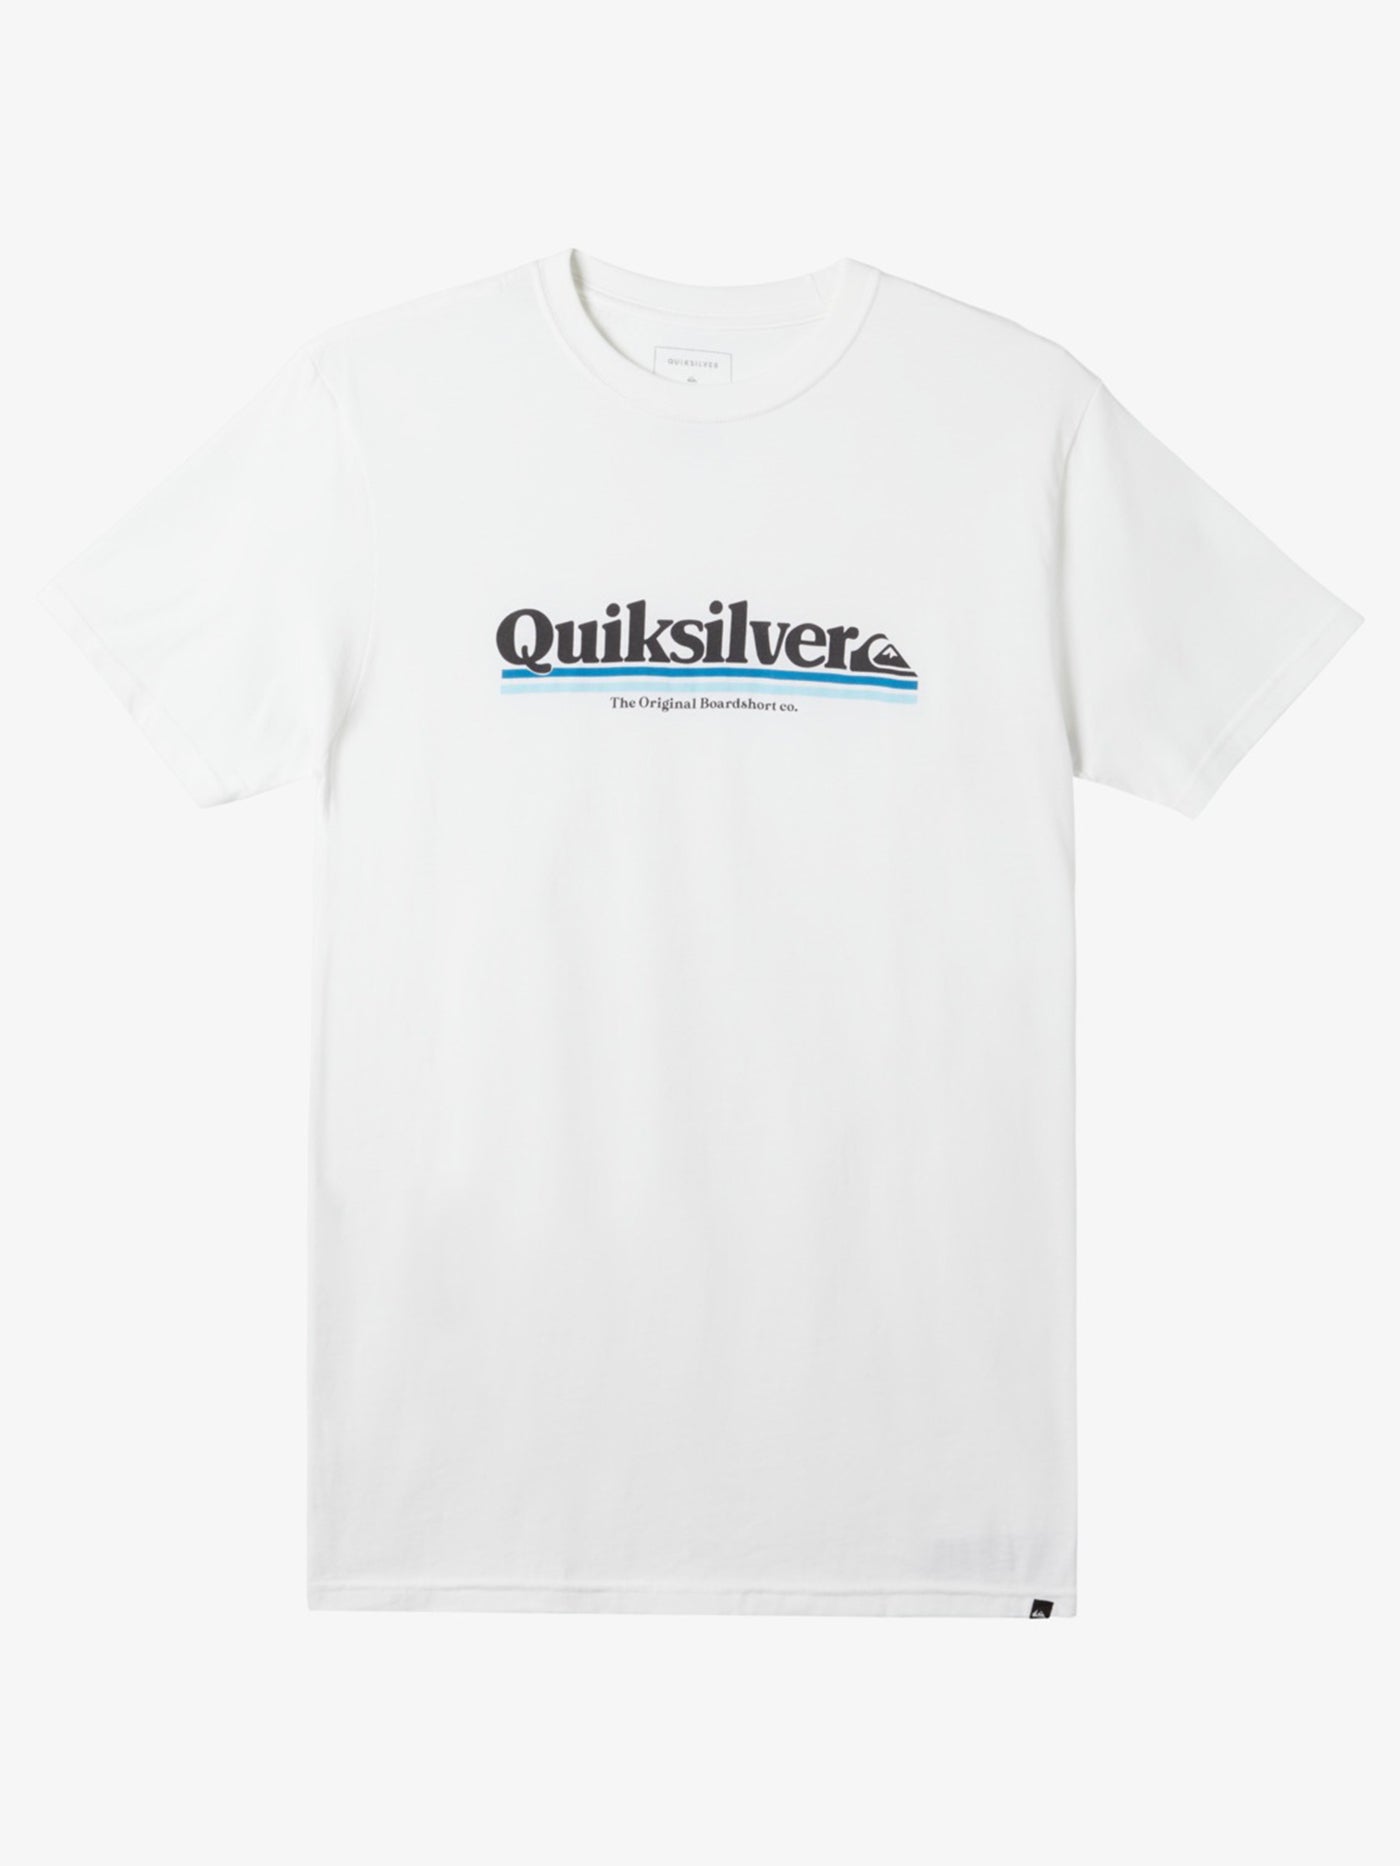 Quiksilver Spring 2023 Between The Lines T-Shirt